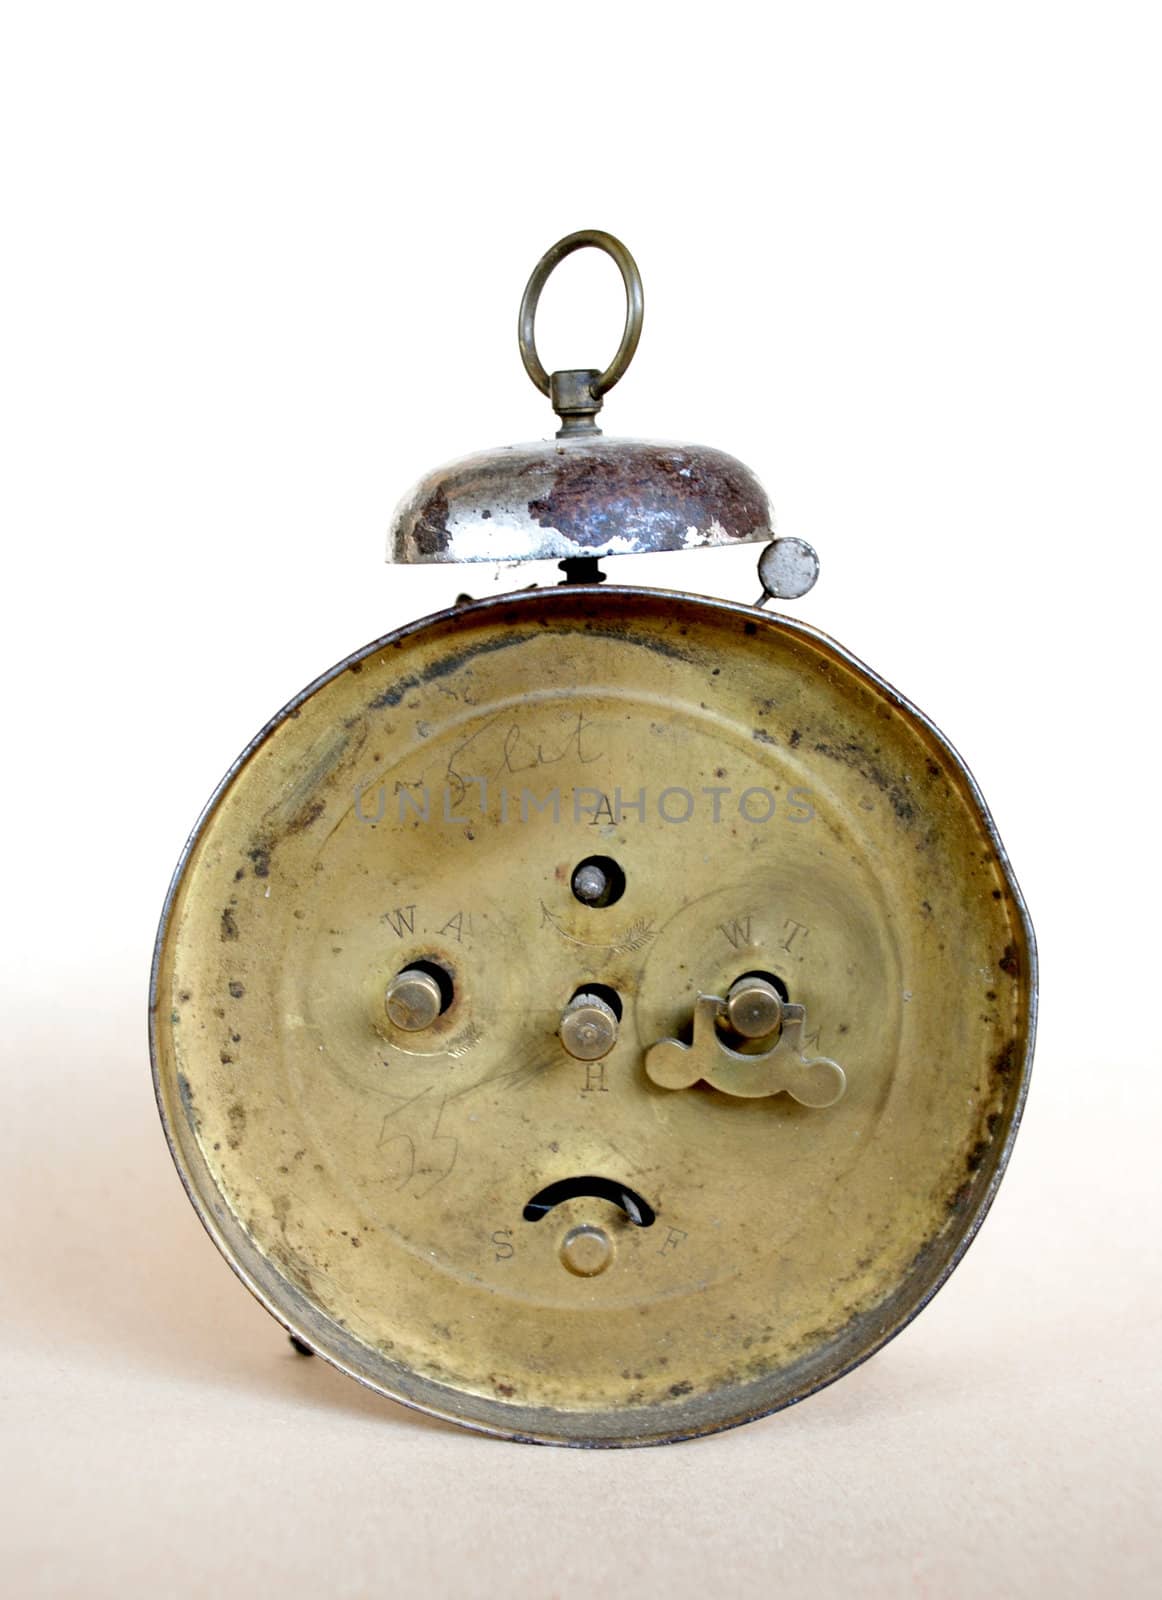 Old Alarm clock by sauletas